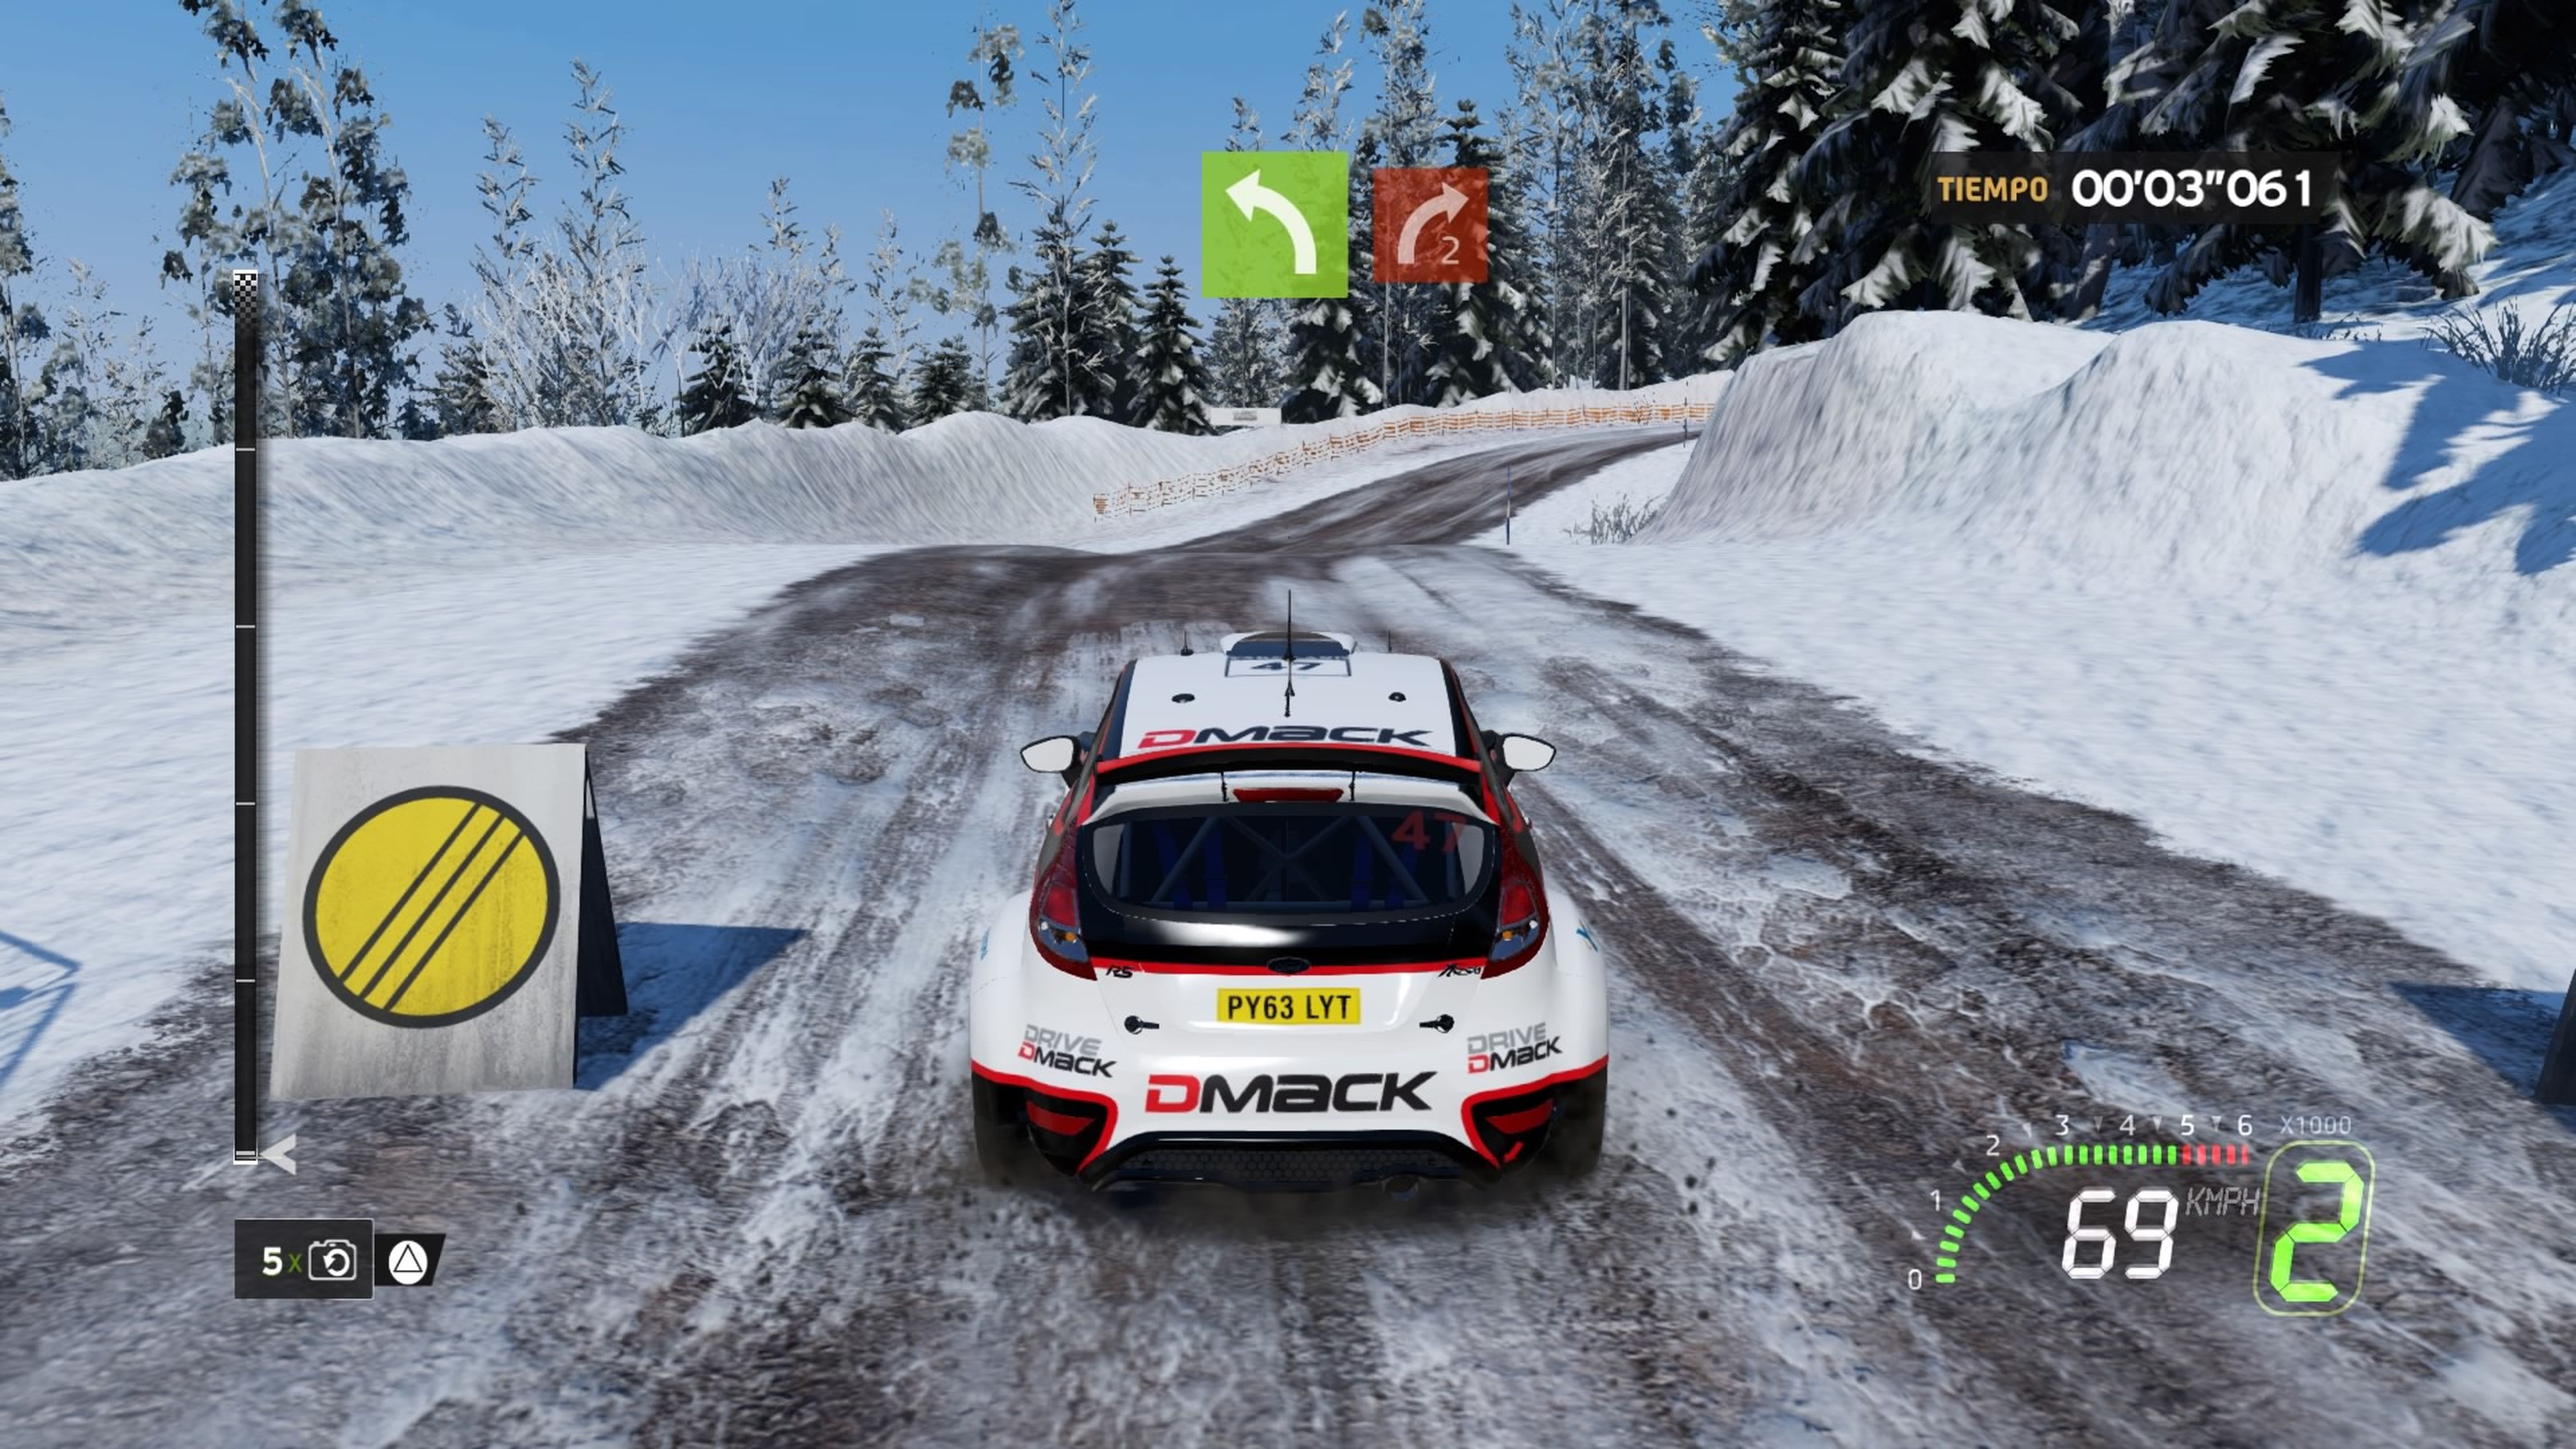 Análisis de WRC 5